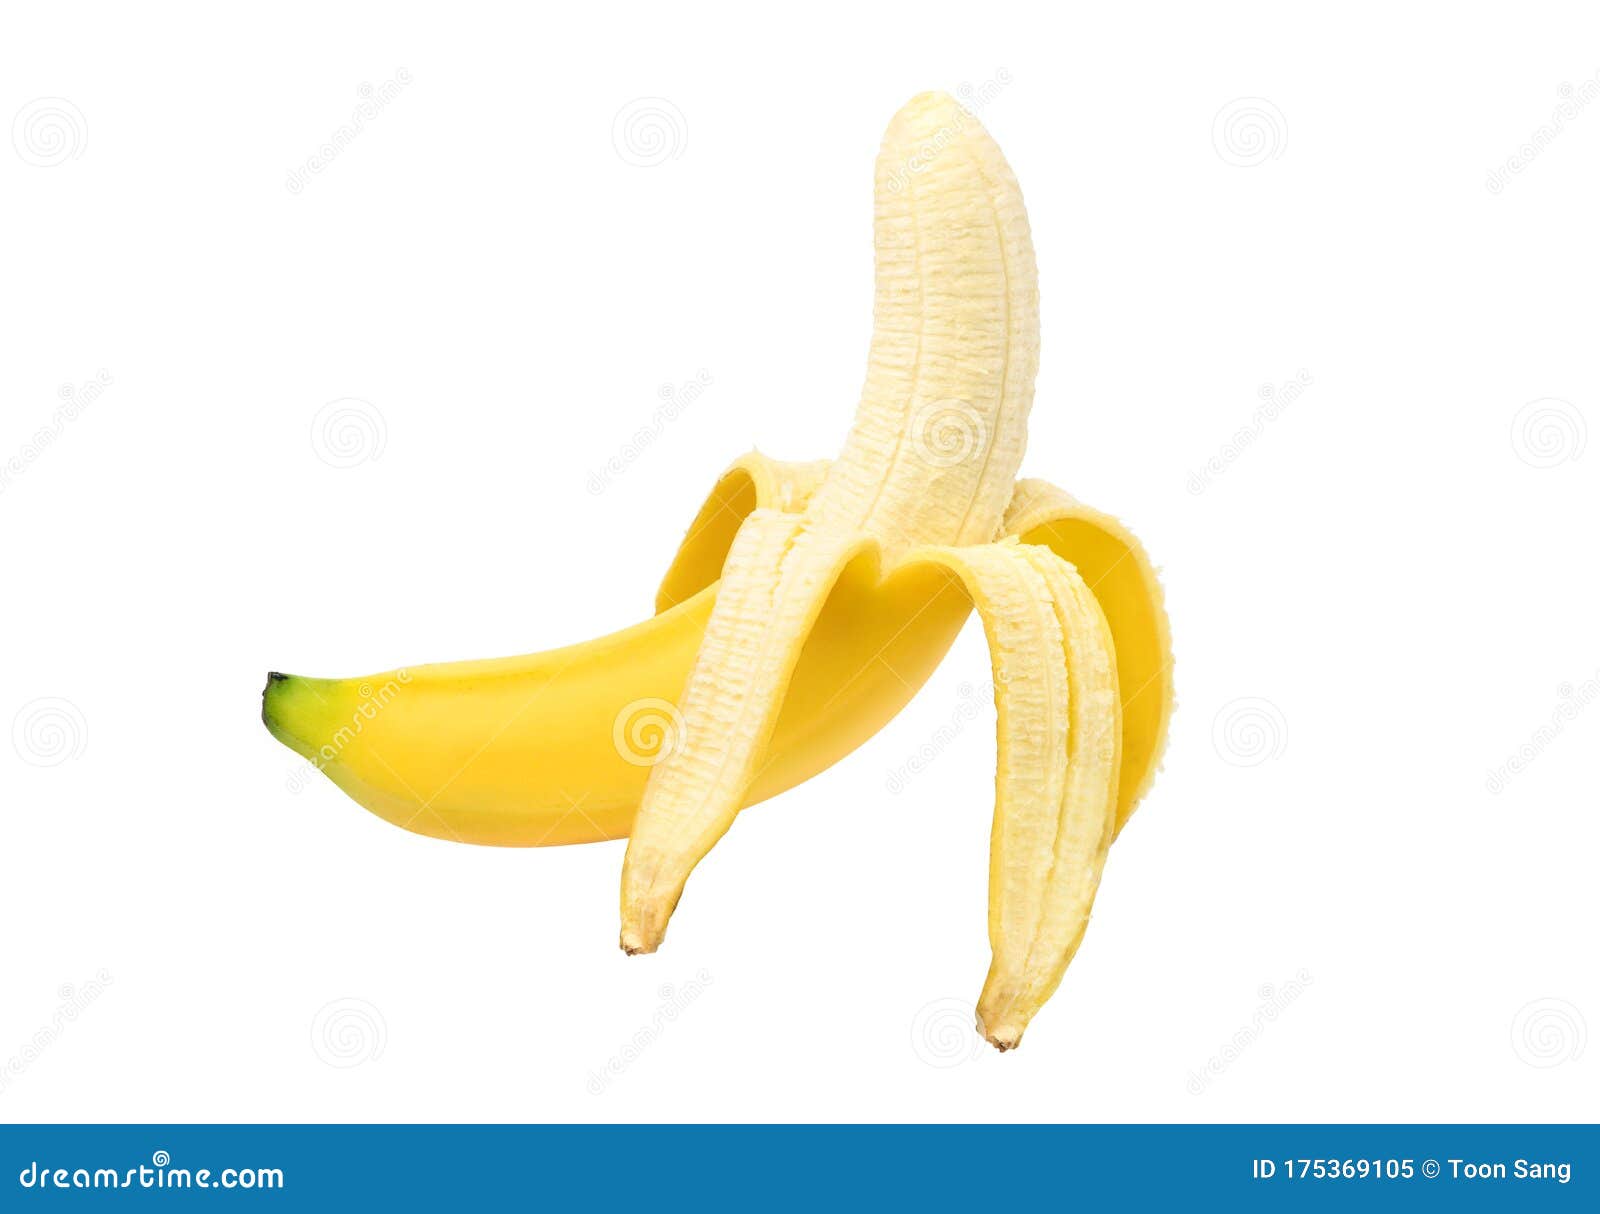 half peeled of ripe banana